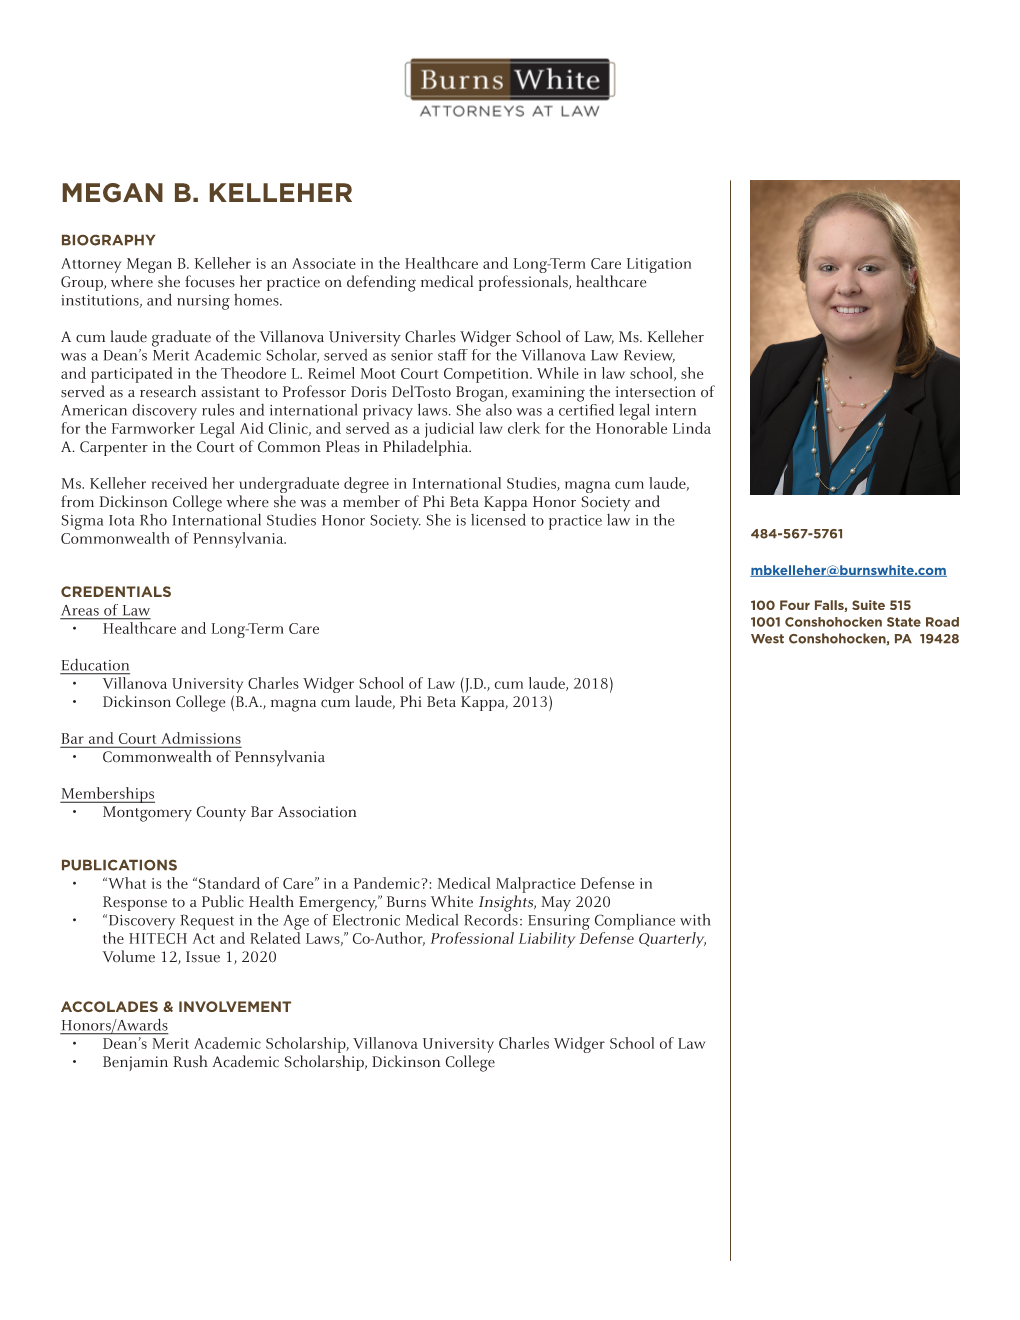 Megan B. Kelleher